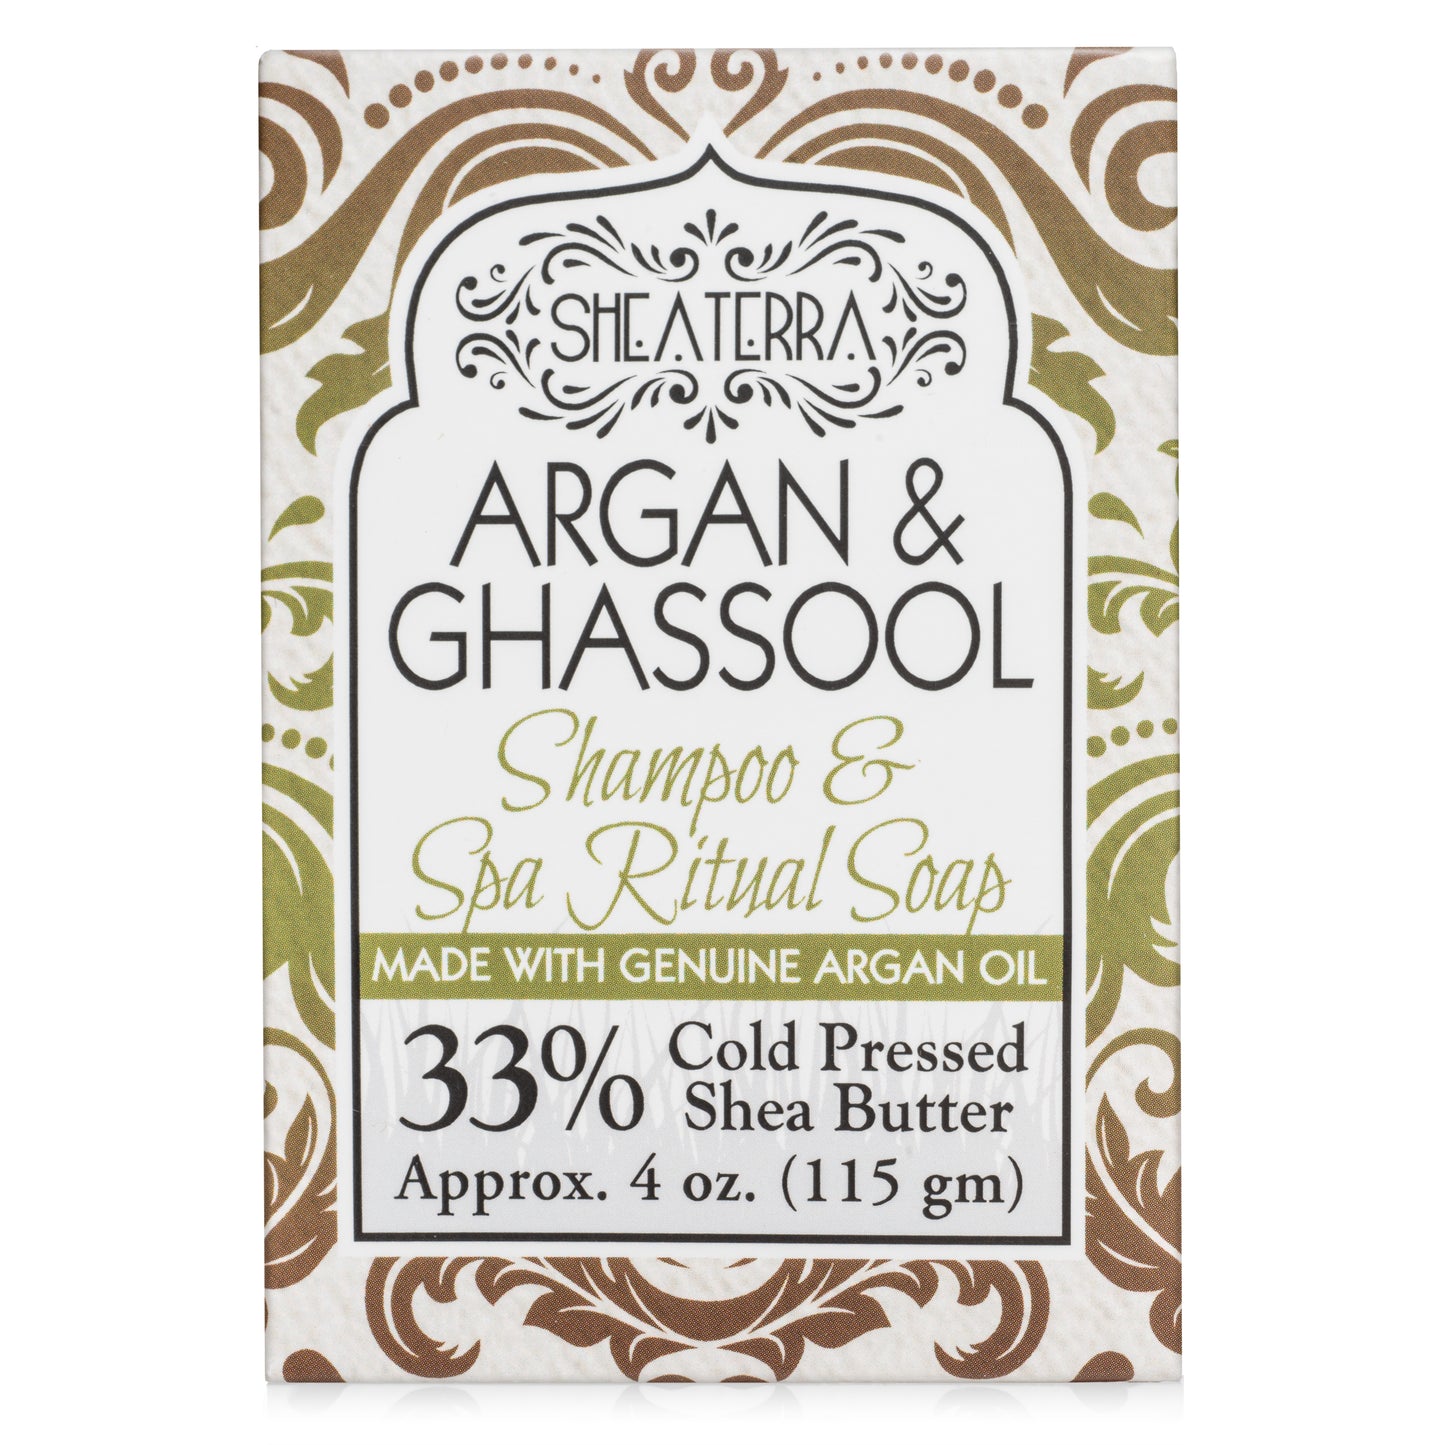 Argan & Ghassool Shampoo